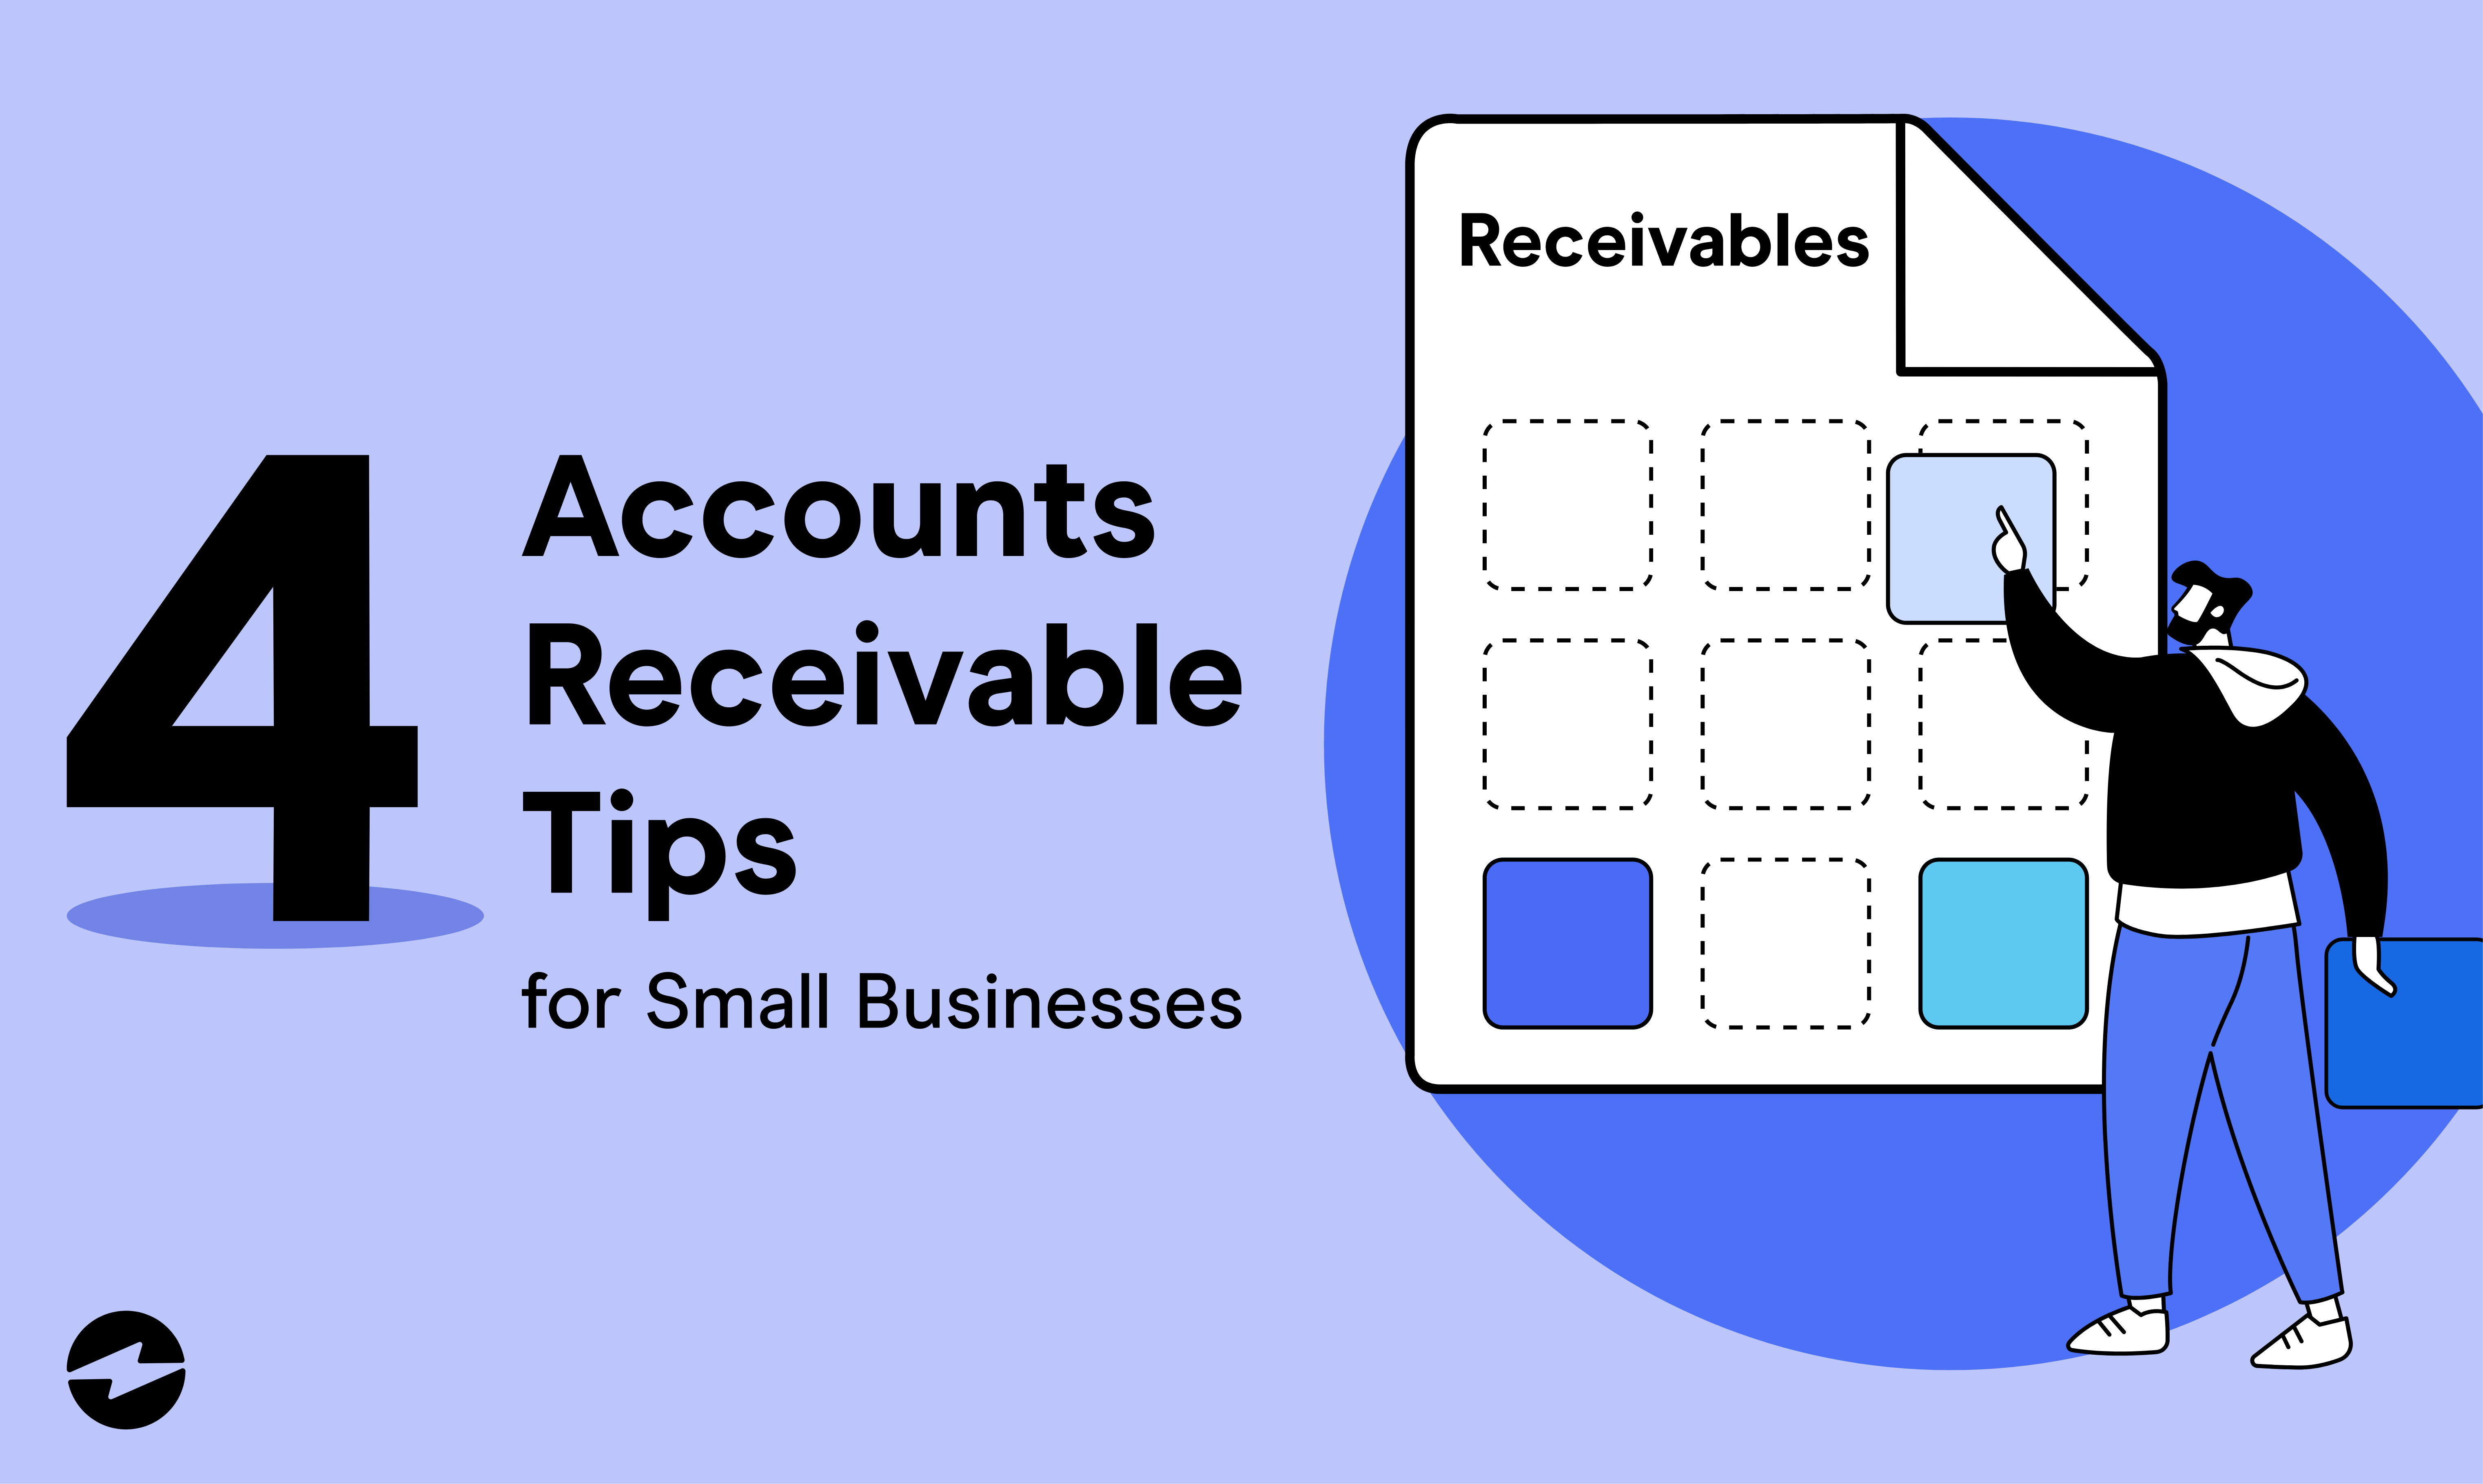 Accounts Receivable Tips